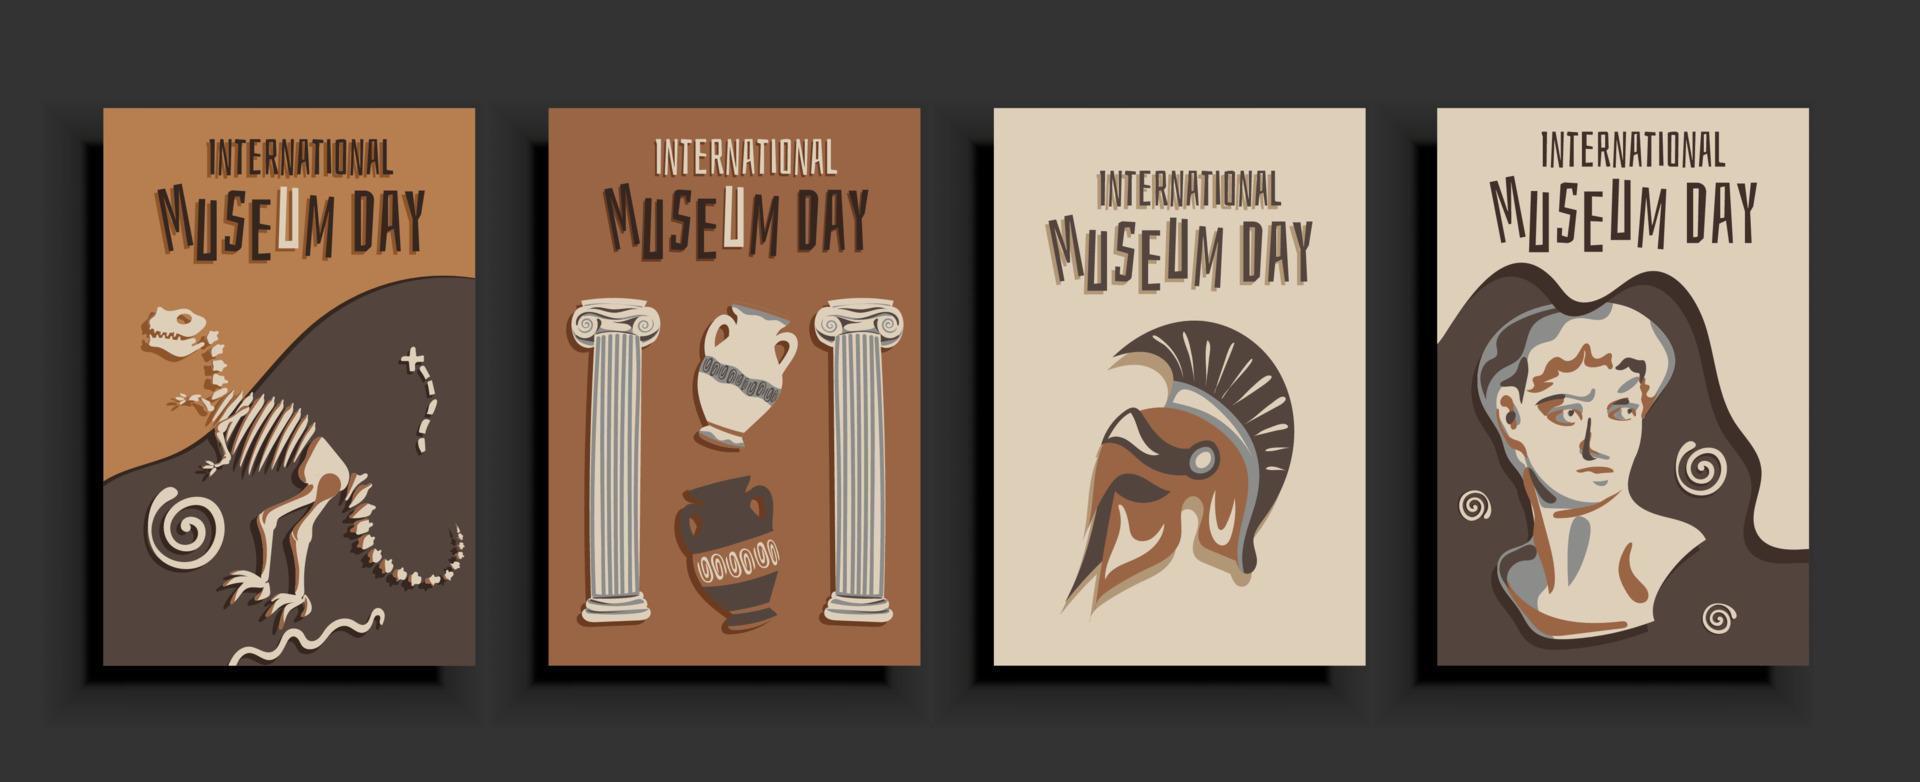 internationell museum dag 18 Maj. illustration vektor design affischer.